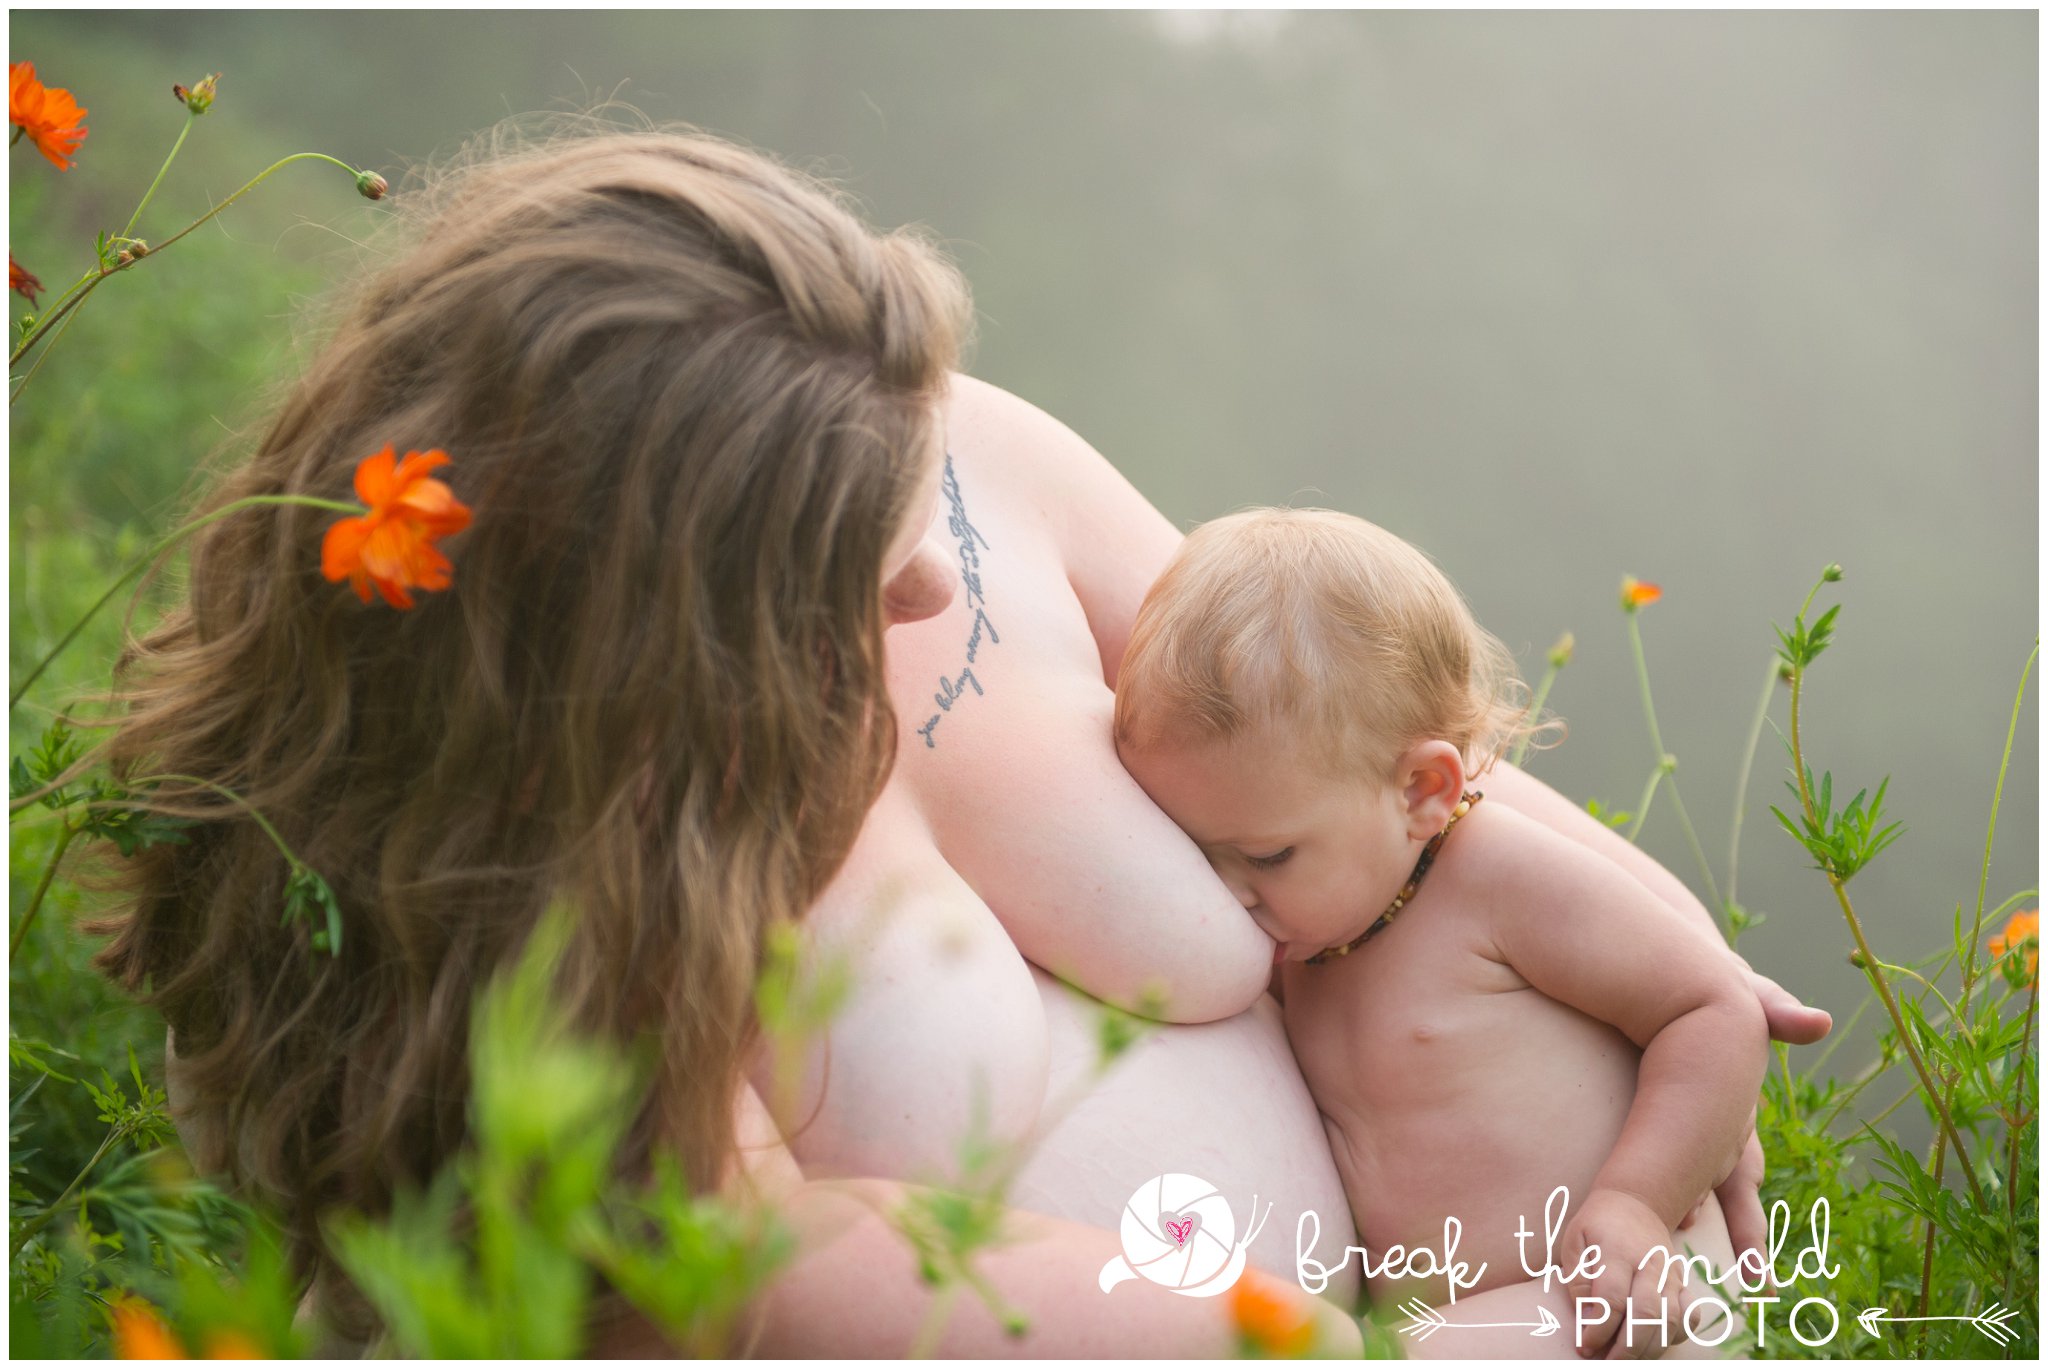 break-the-mold-photo-nursing-breastfeeding-session-womens-beauty-woman-body-nurse-breastfed (4).jpg